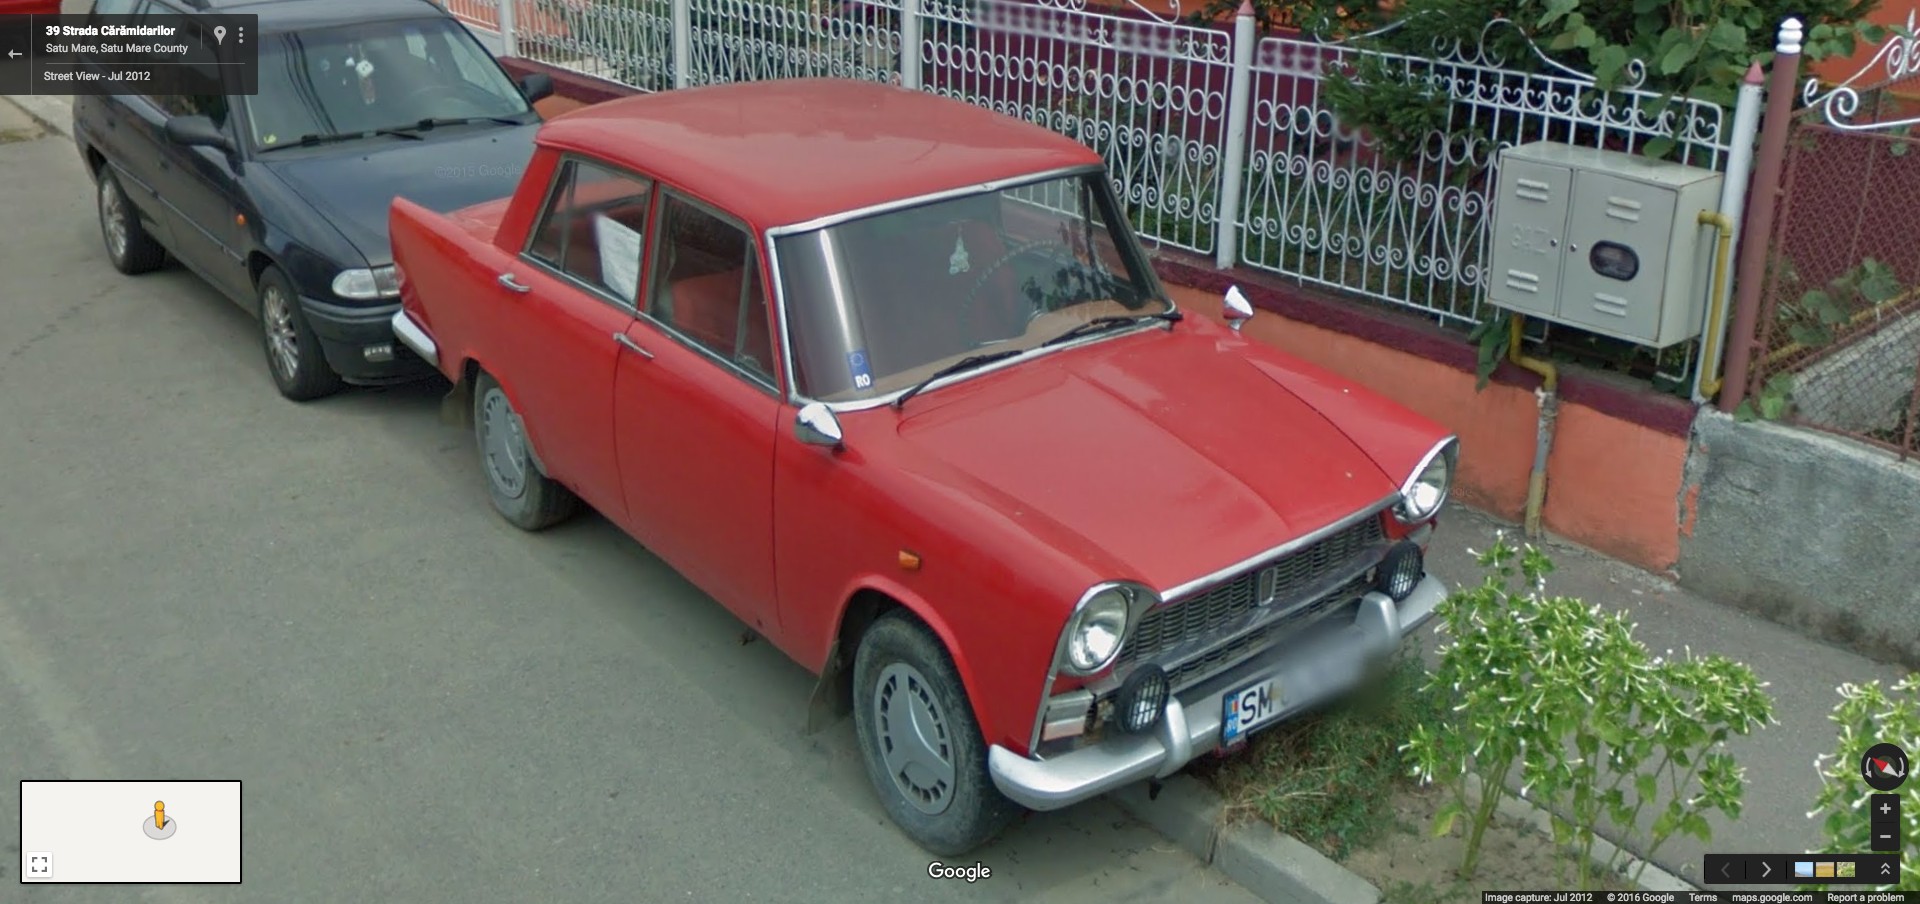 Fiat 1800 - Satu Mare